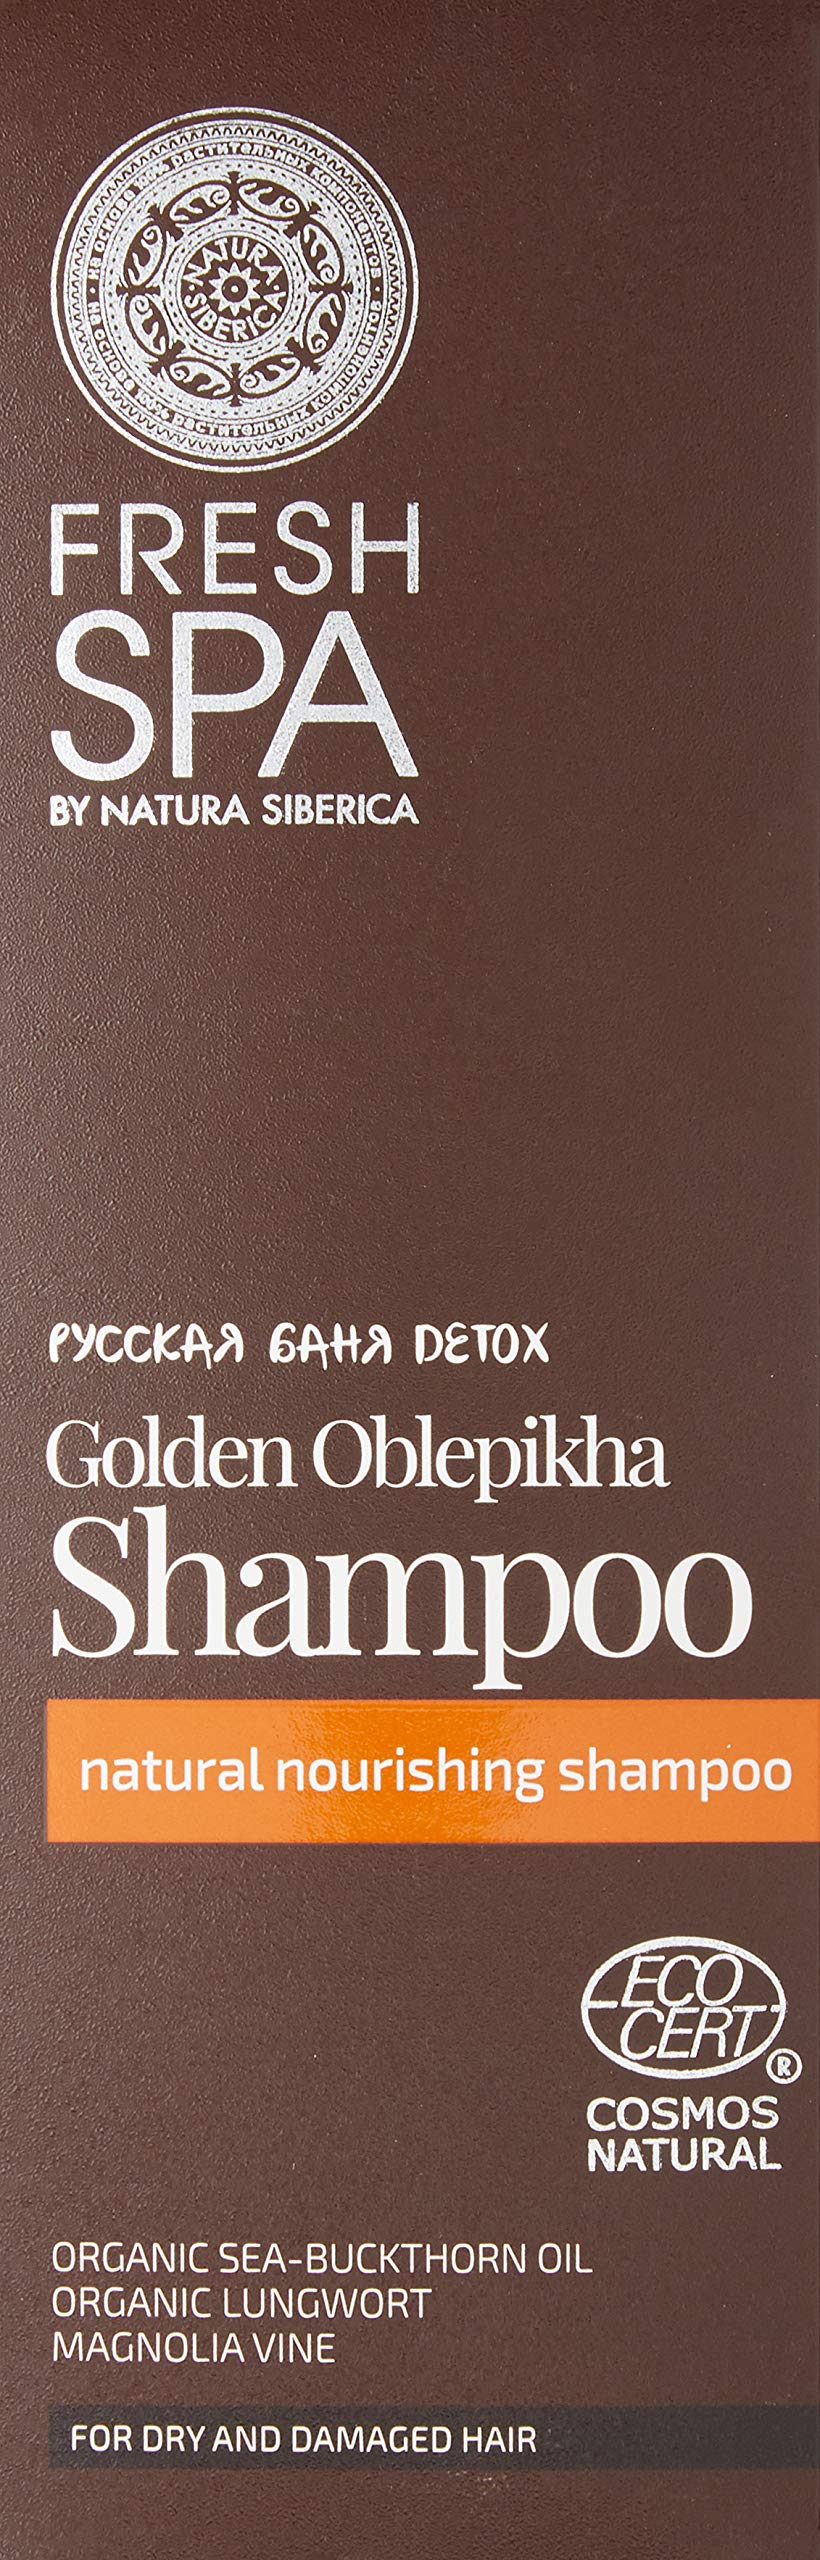 natura siberica szampon golden